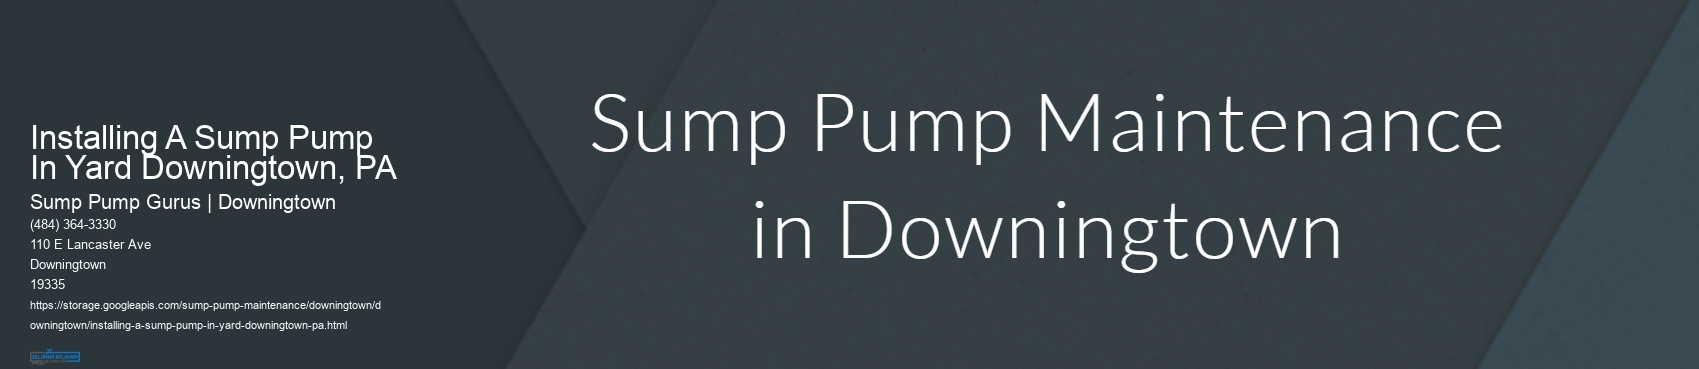 Installing A Sump Pump In Yard Downingtown, PA